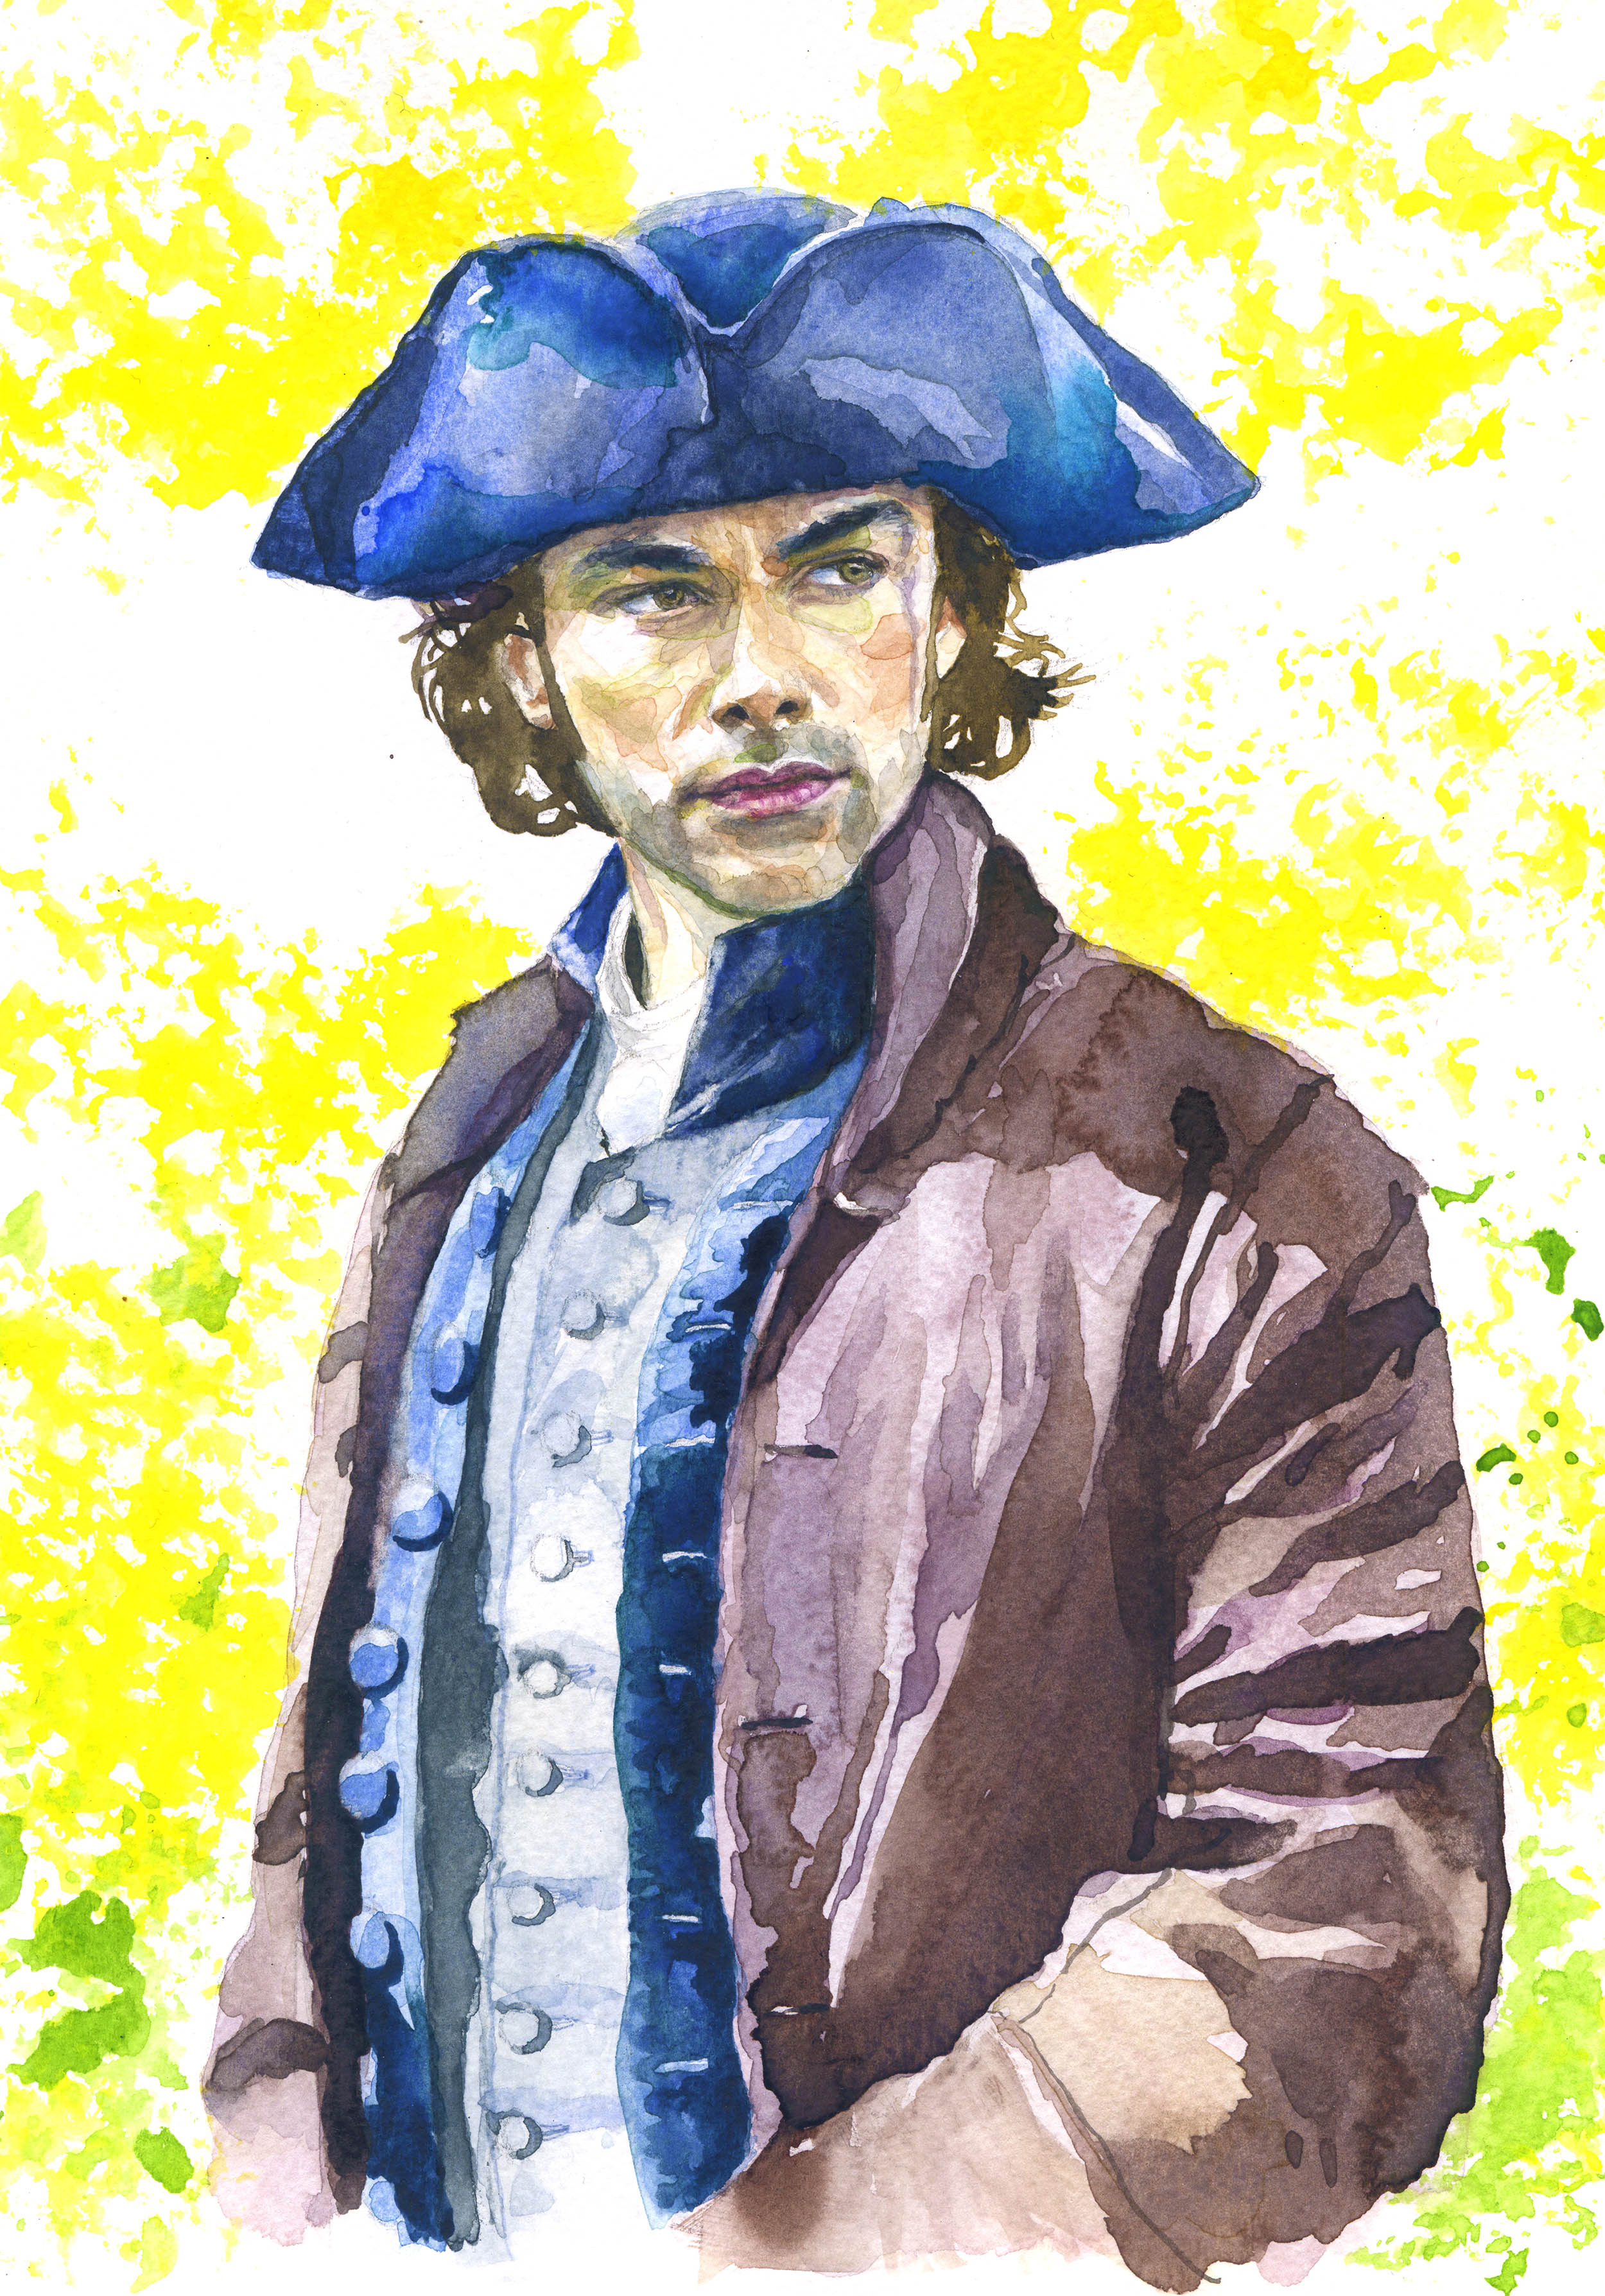 Portrait of Aidan Turner - Ross Poldark/Pastel & Watercolour on paper